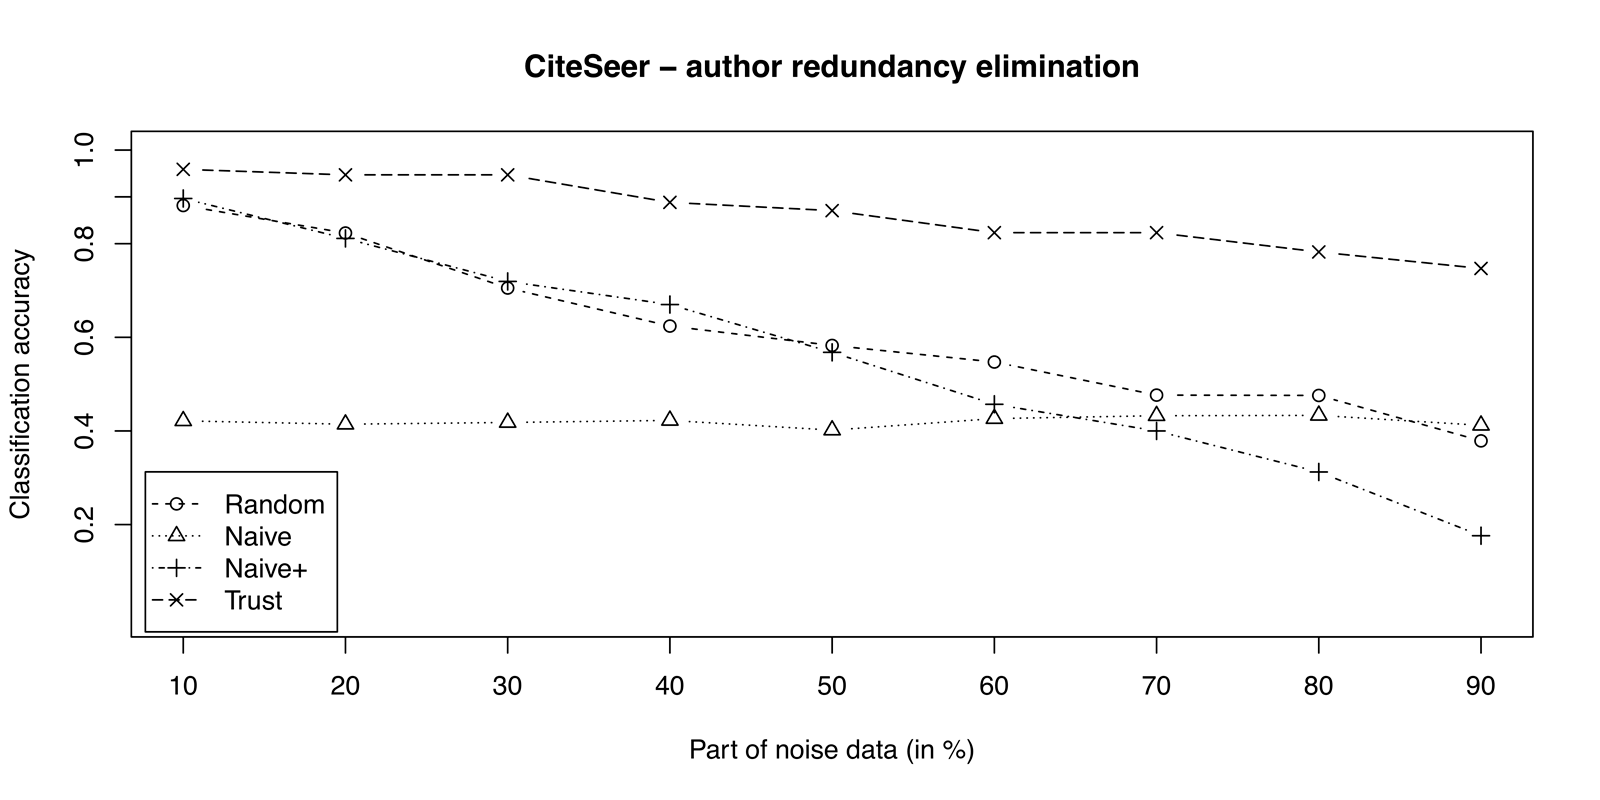 Redundancy elimination on CiteSeer dataset for $34$ random clusters (as a result of ER), containing author names.